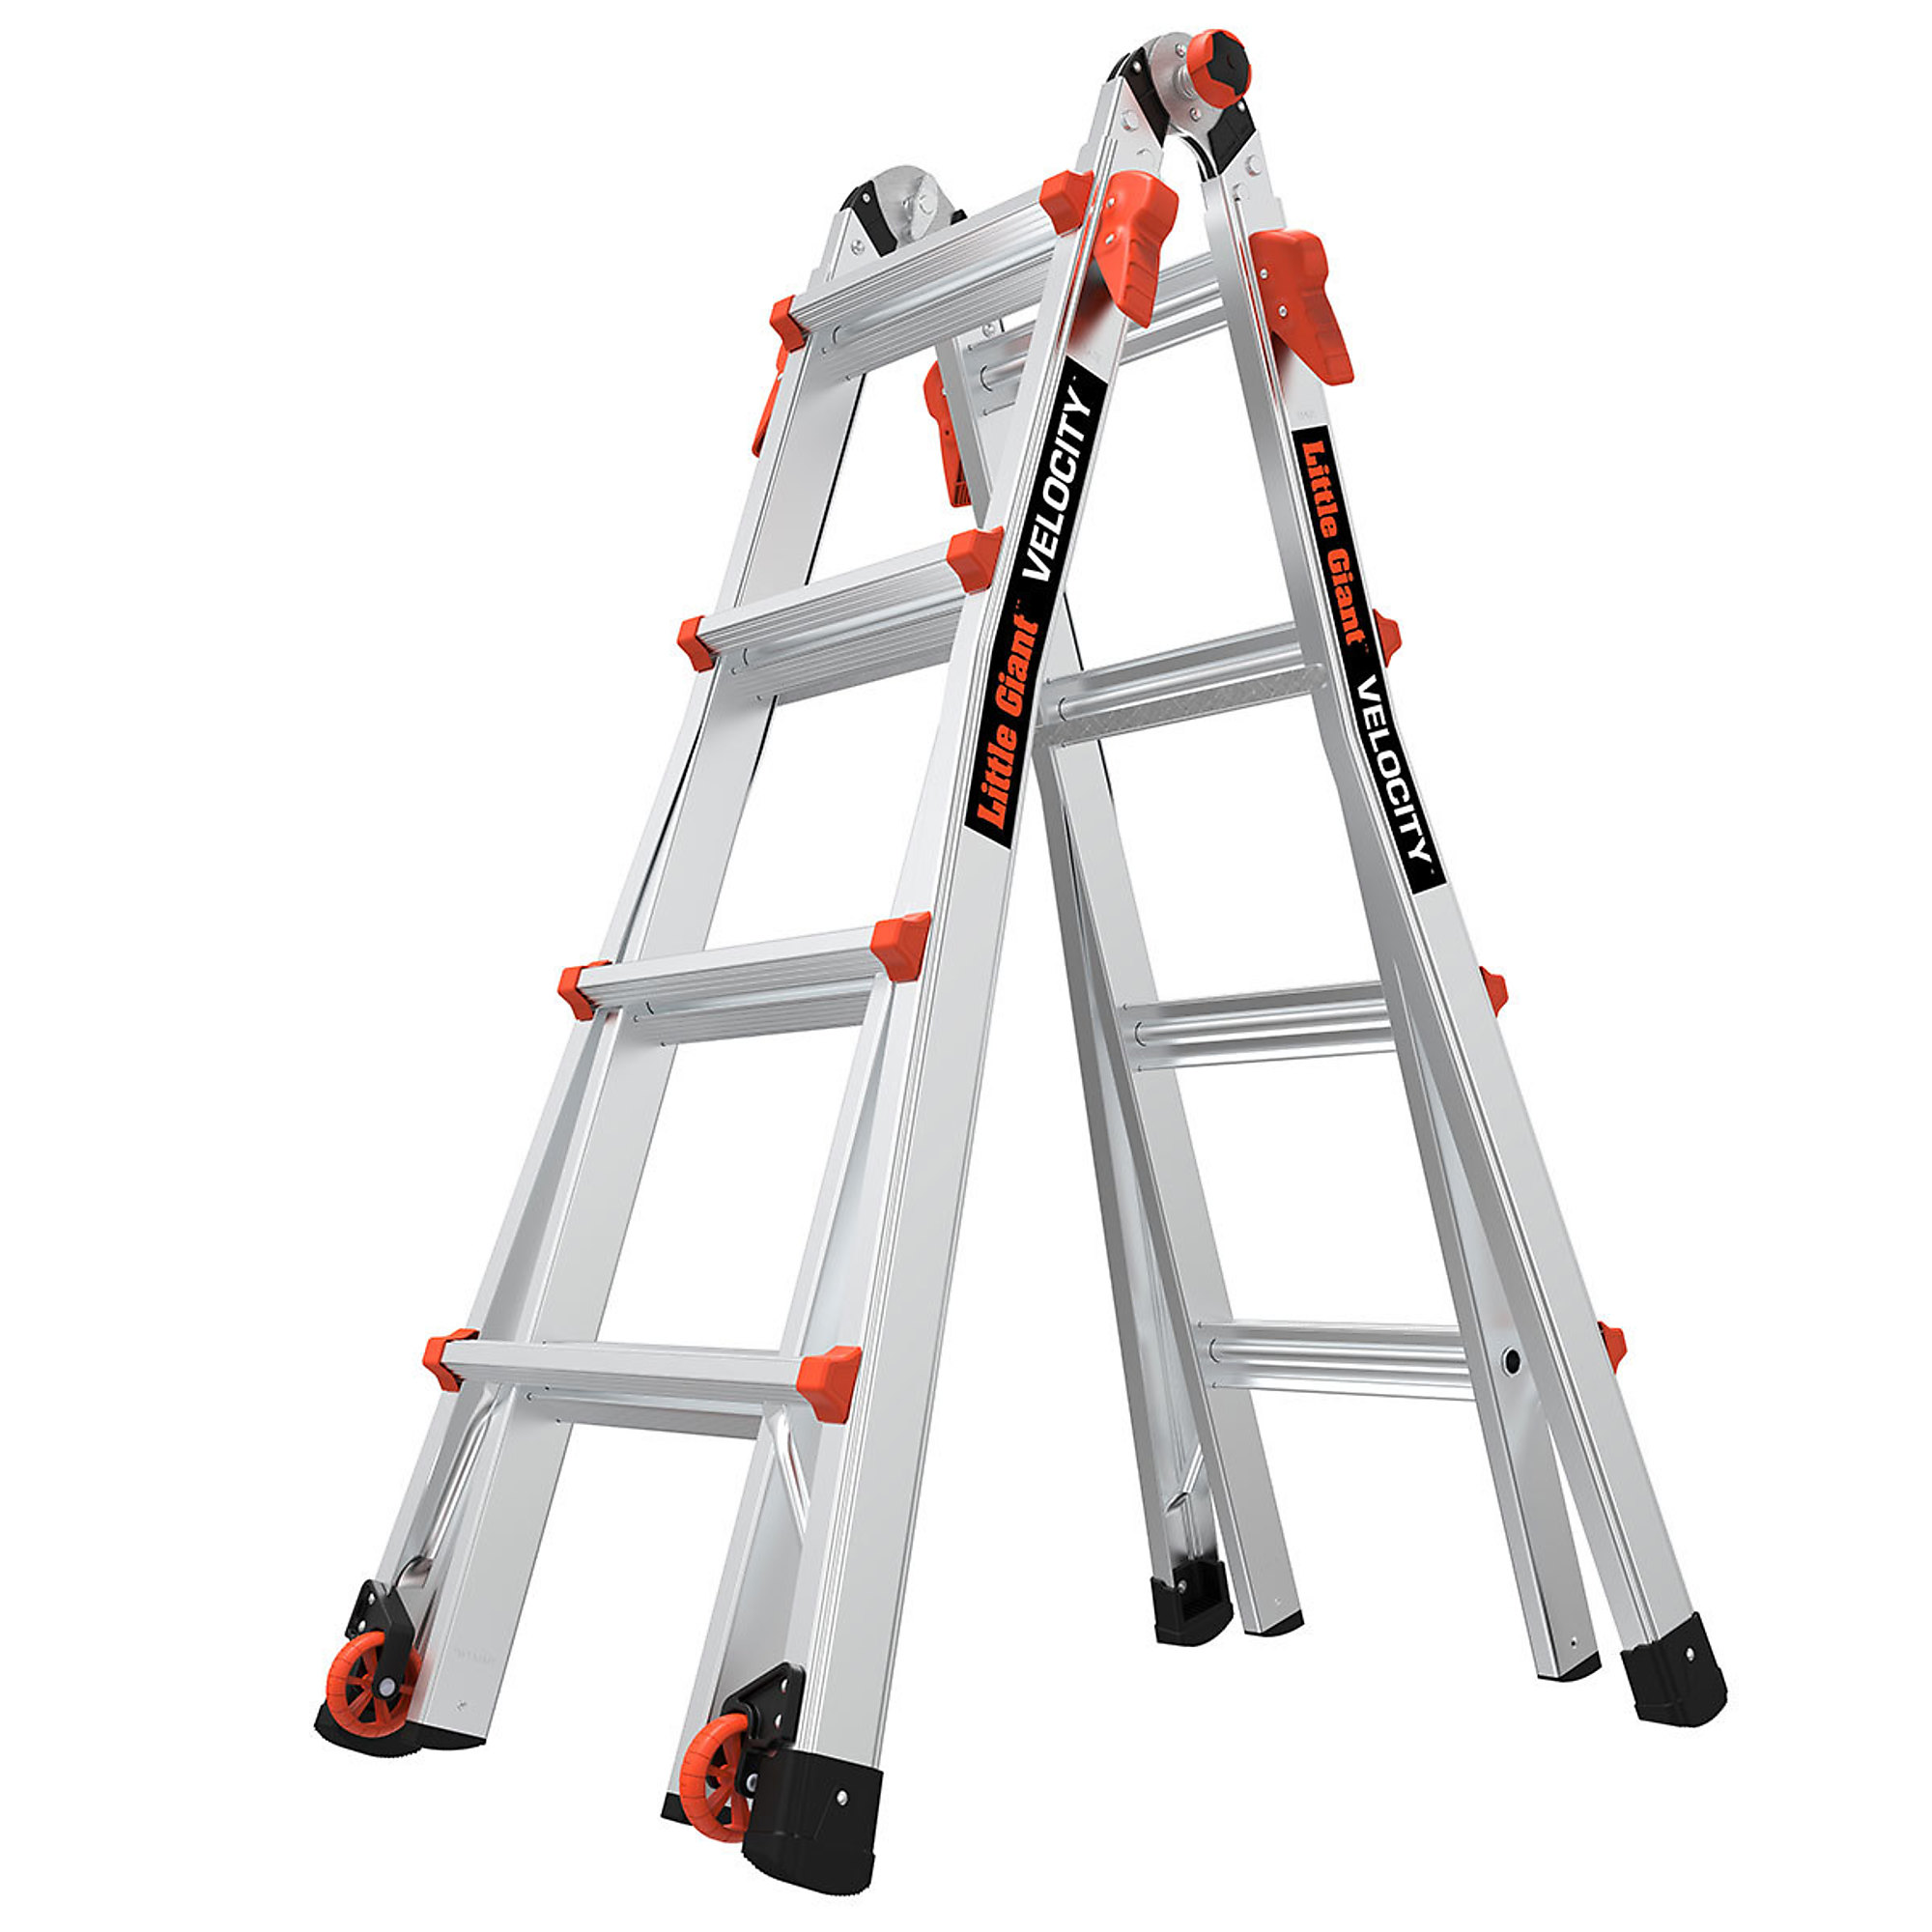 VELOCITY 17 Alum Articulated Extend Ladder, Height 17 ft, Capacity 300 lb, Material Aluminum, Model - Little Giant Ladder 15417-001